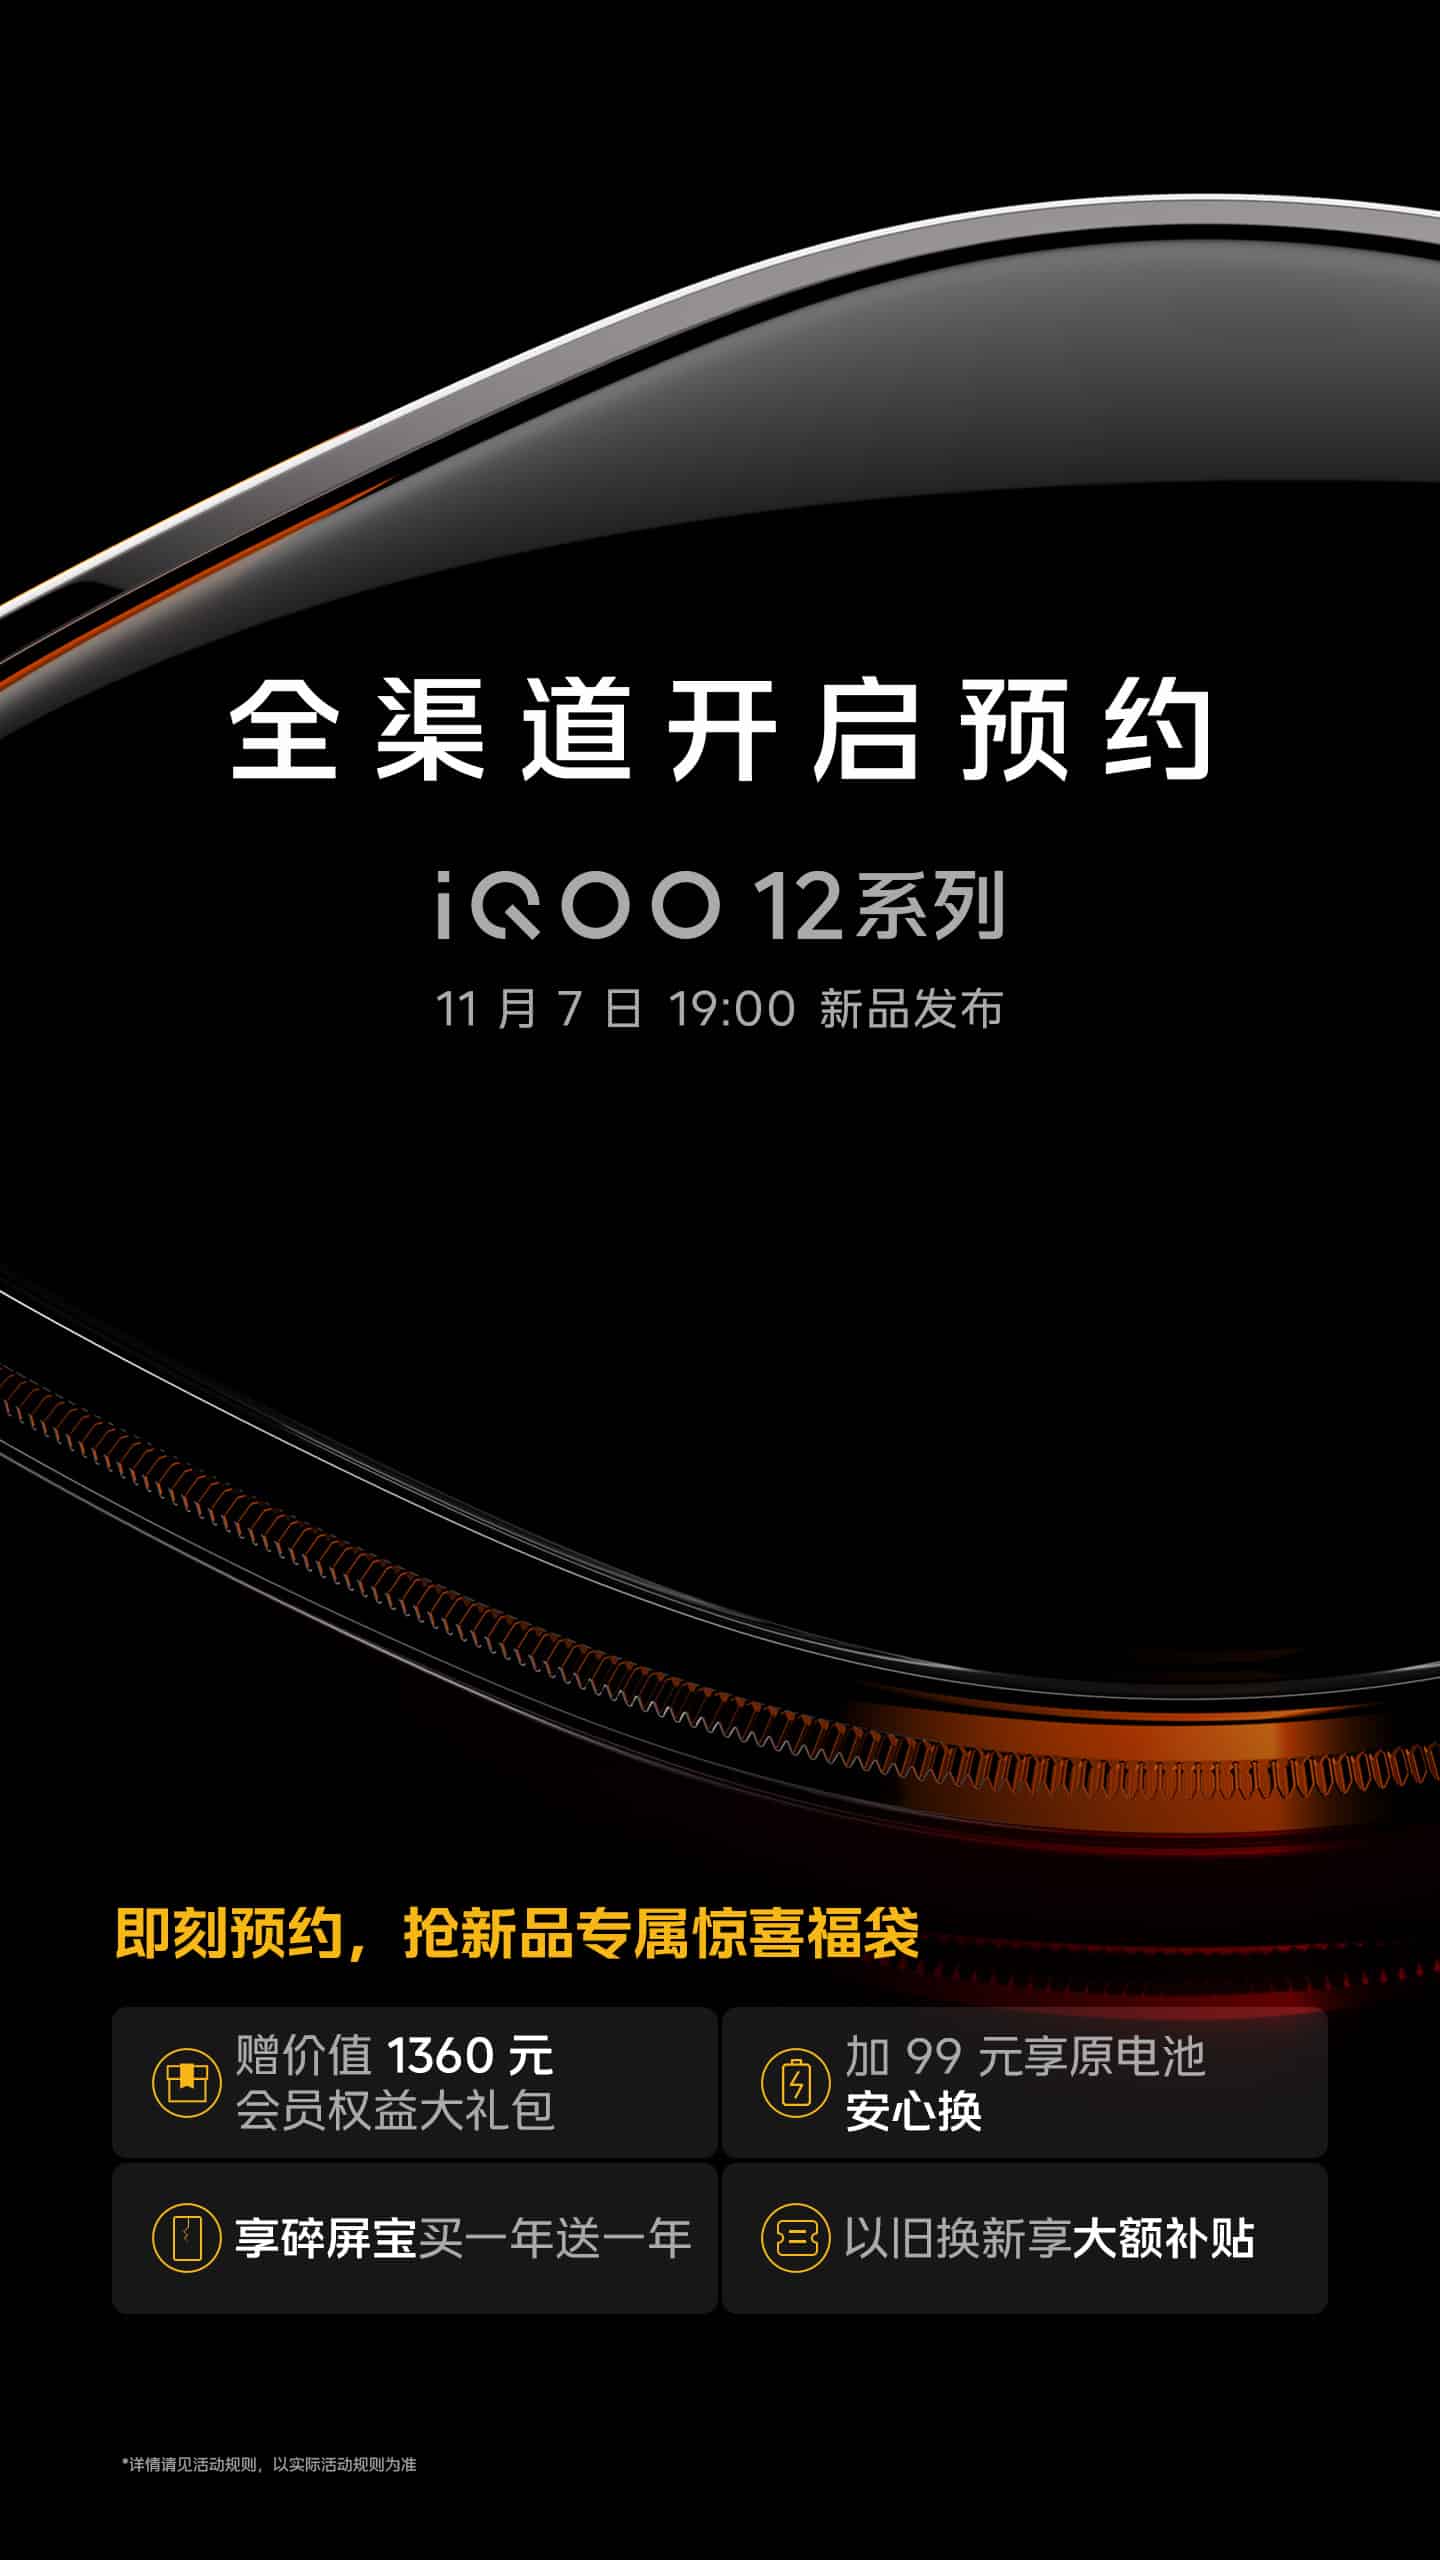 iQOO 12 series launch date